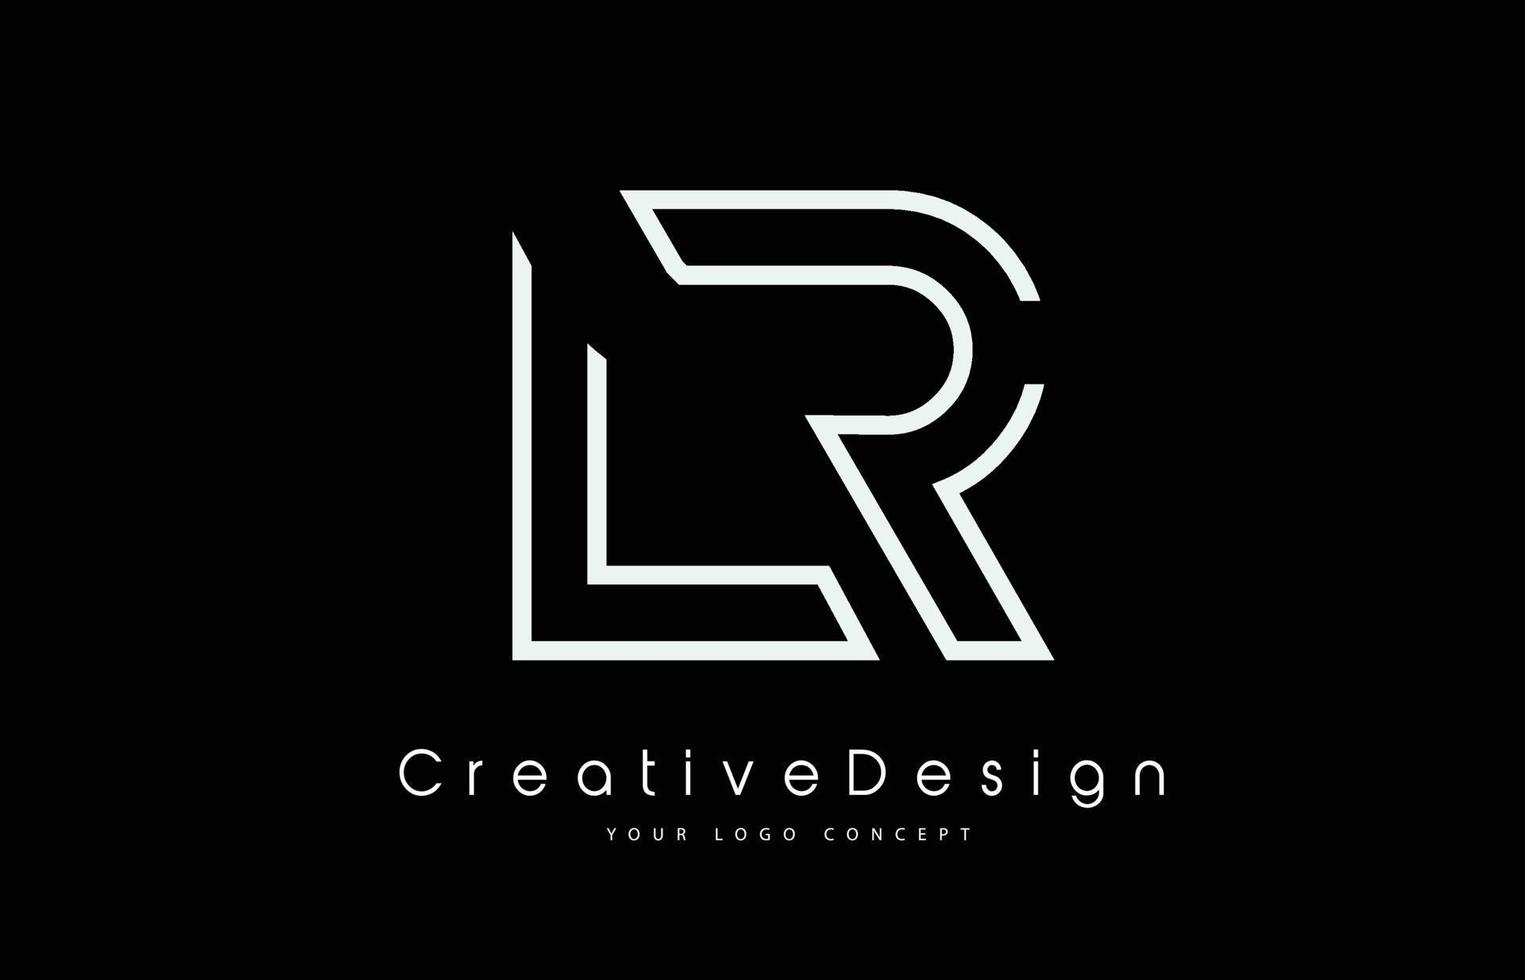 lr letter logo ontwerp in zwart wit. vector